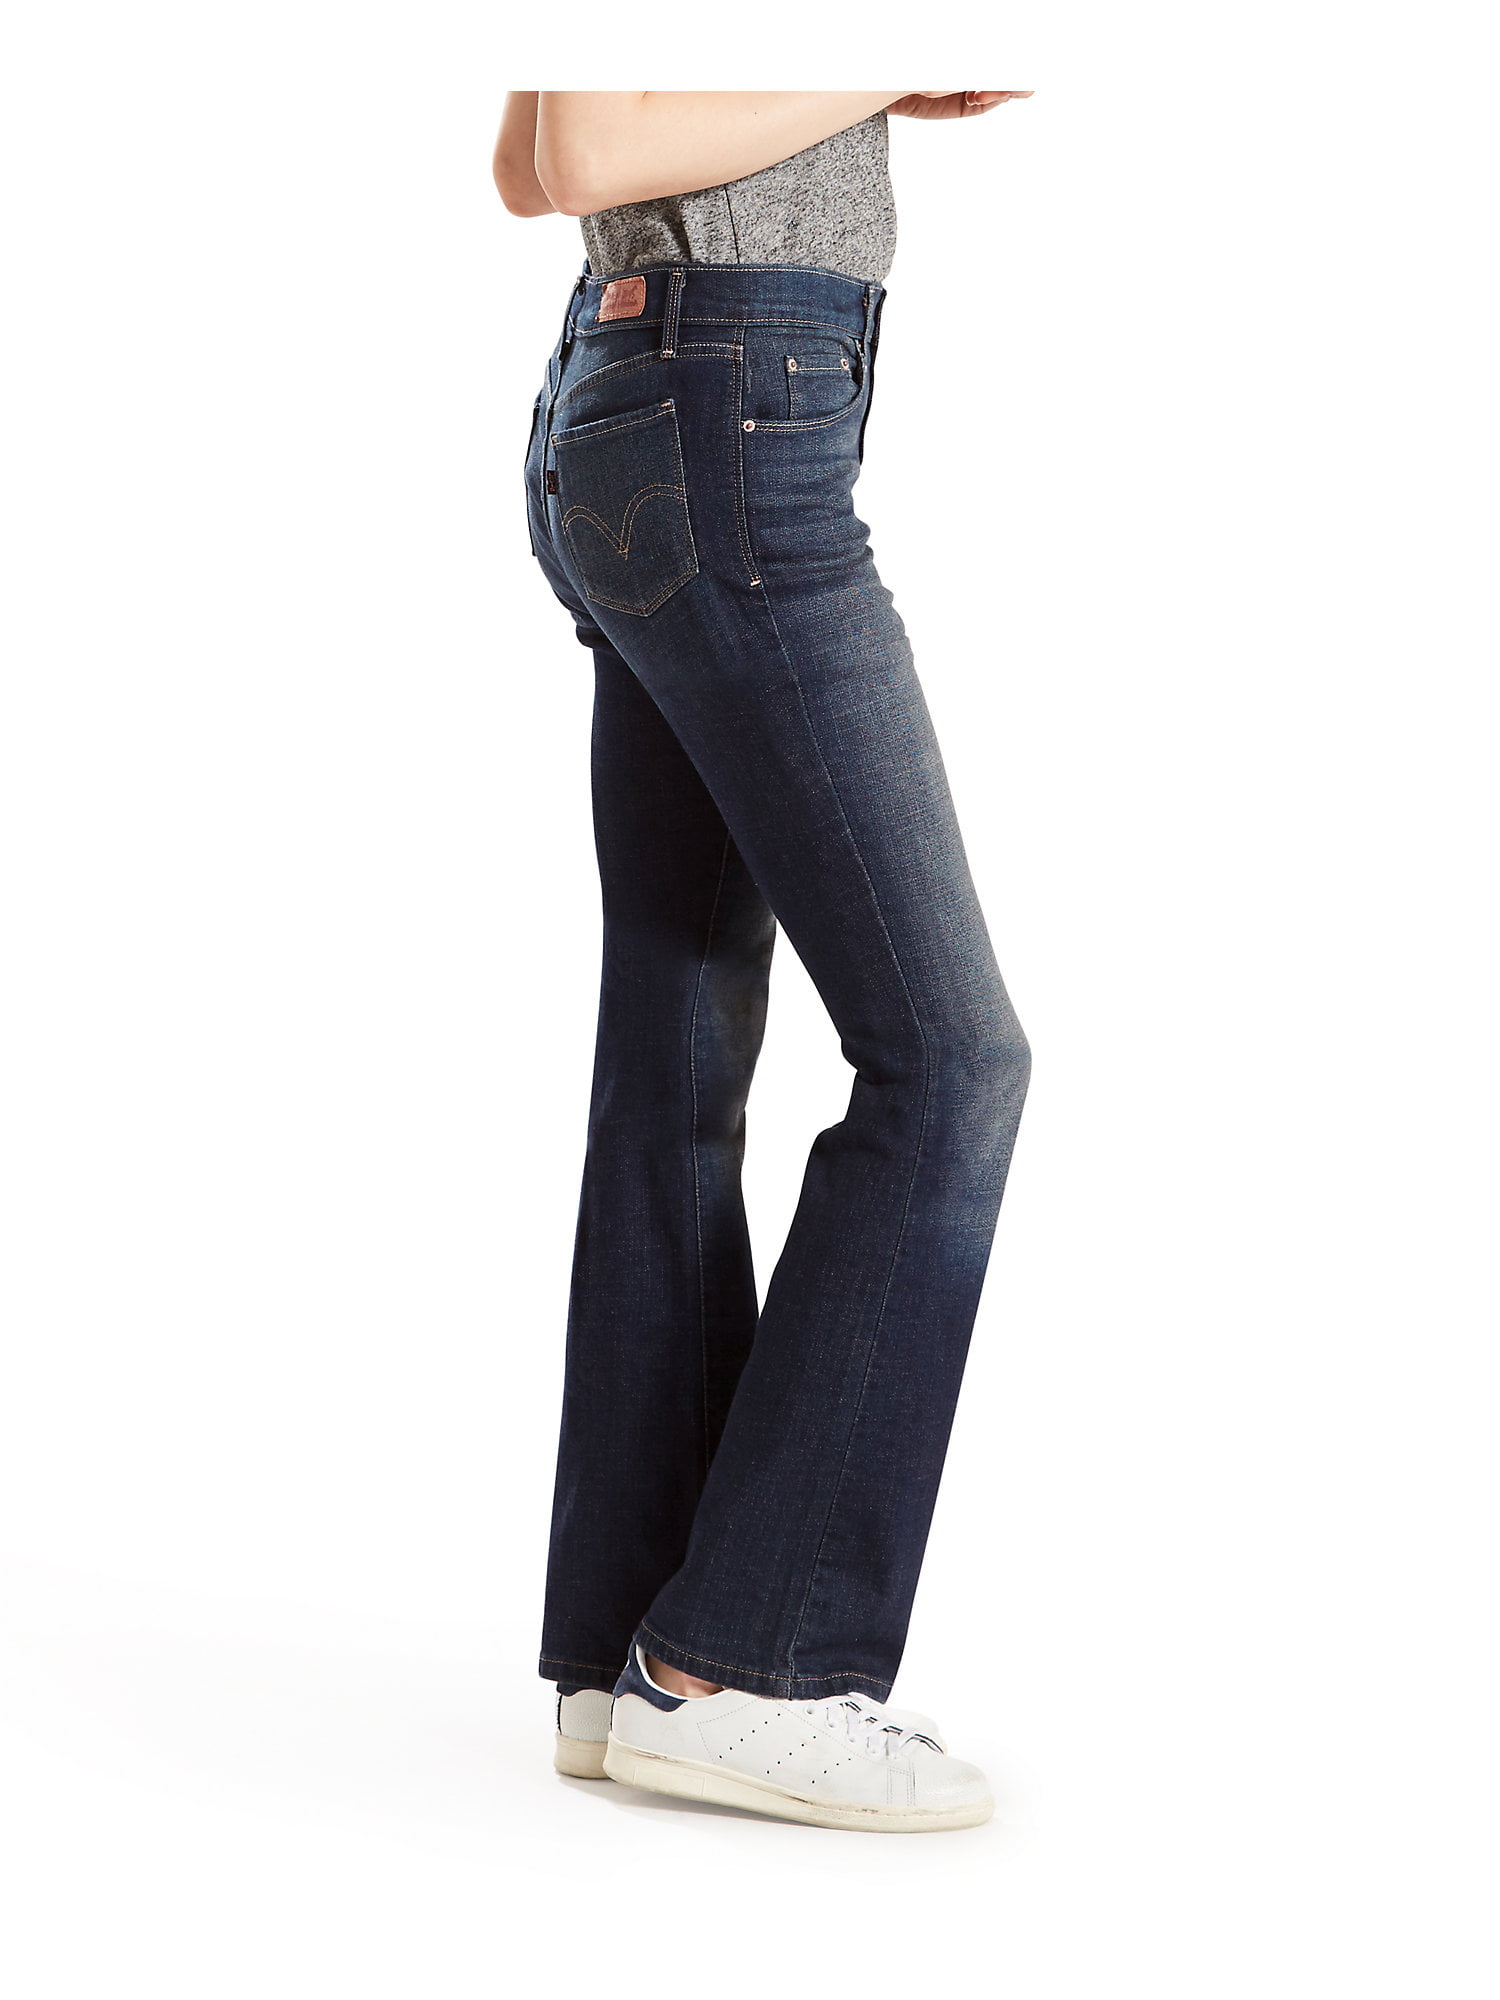 Levi's Women's 515 Bootcut Jeans 